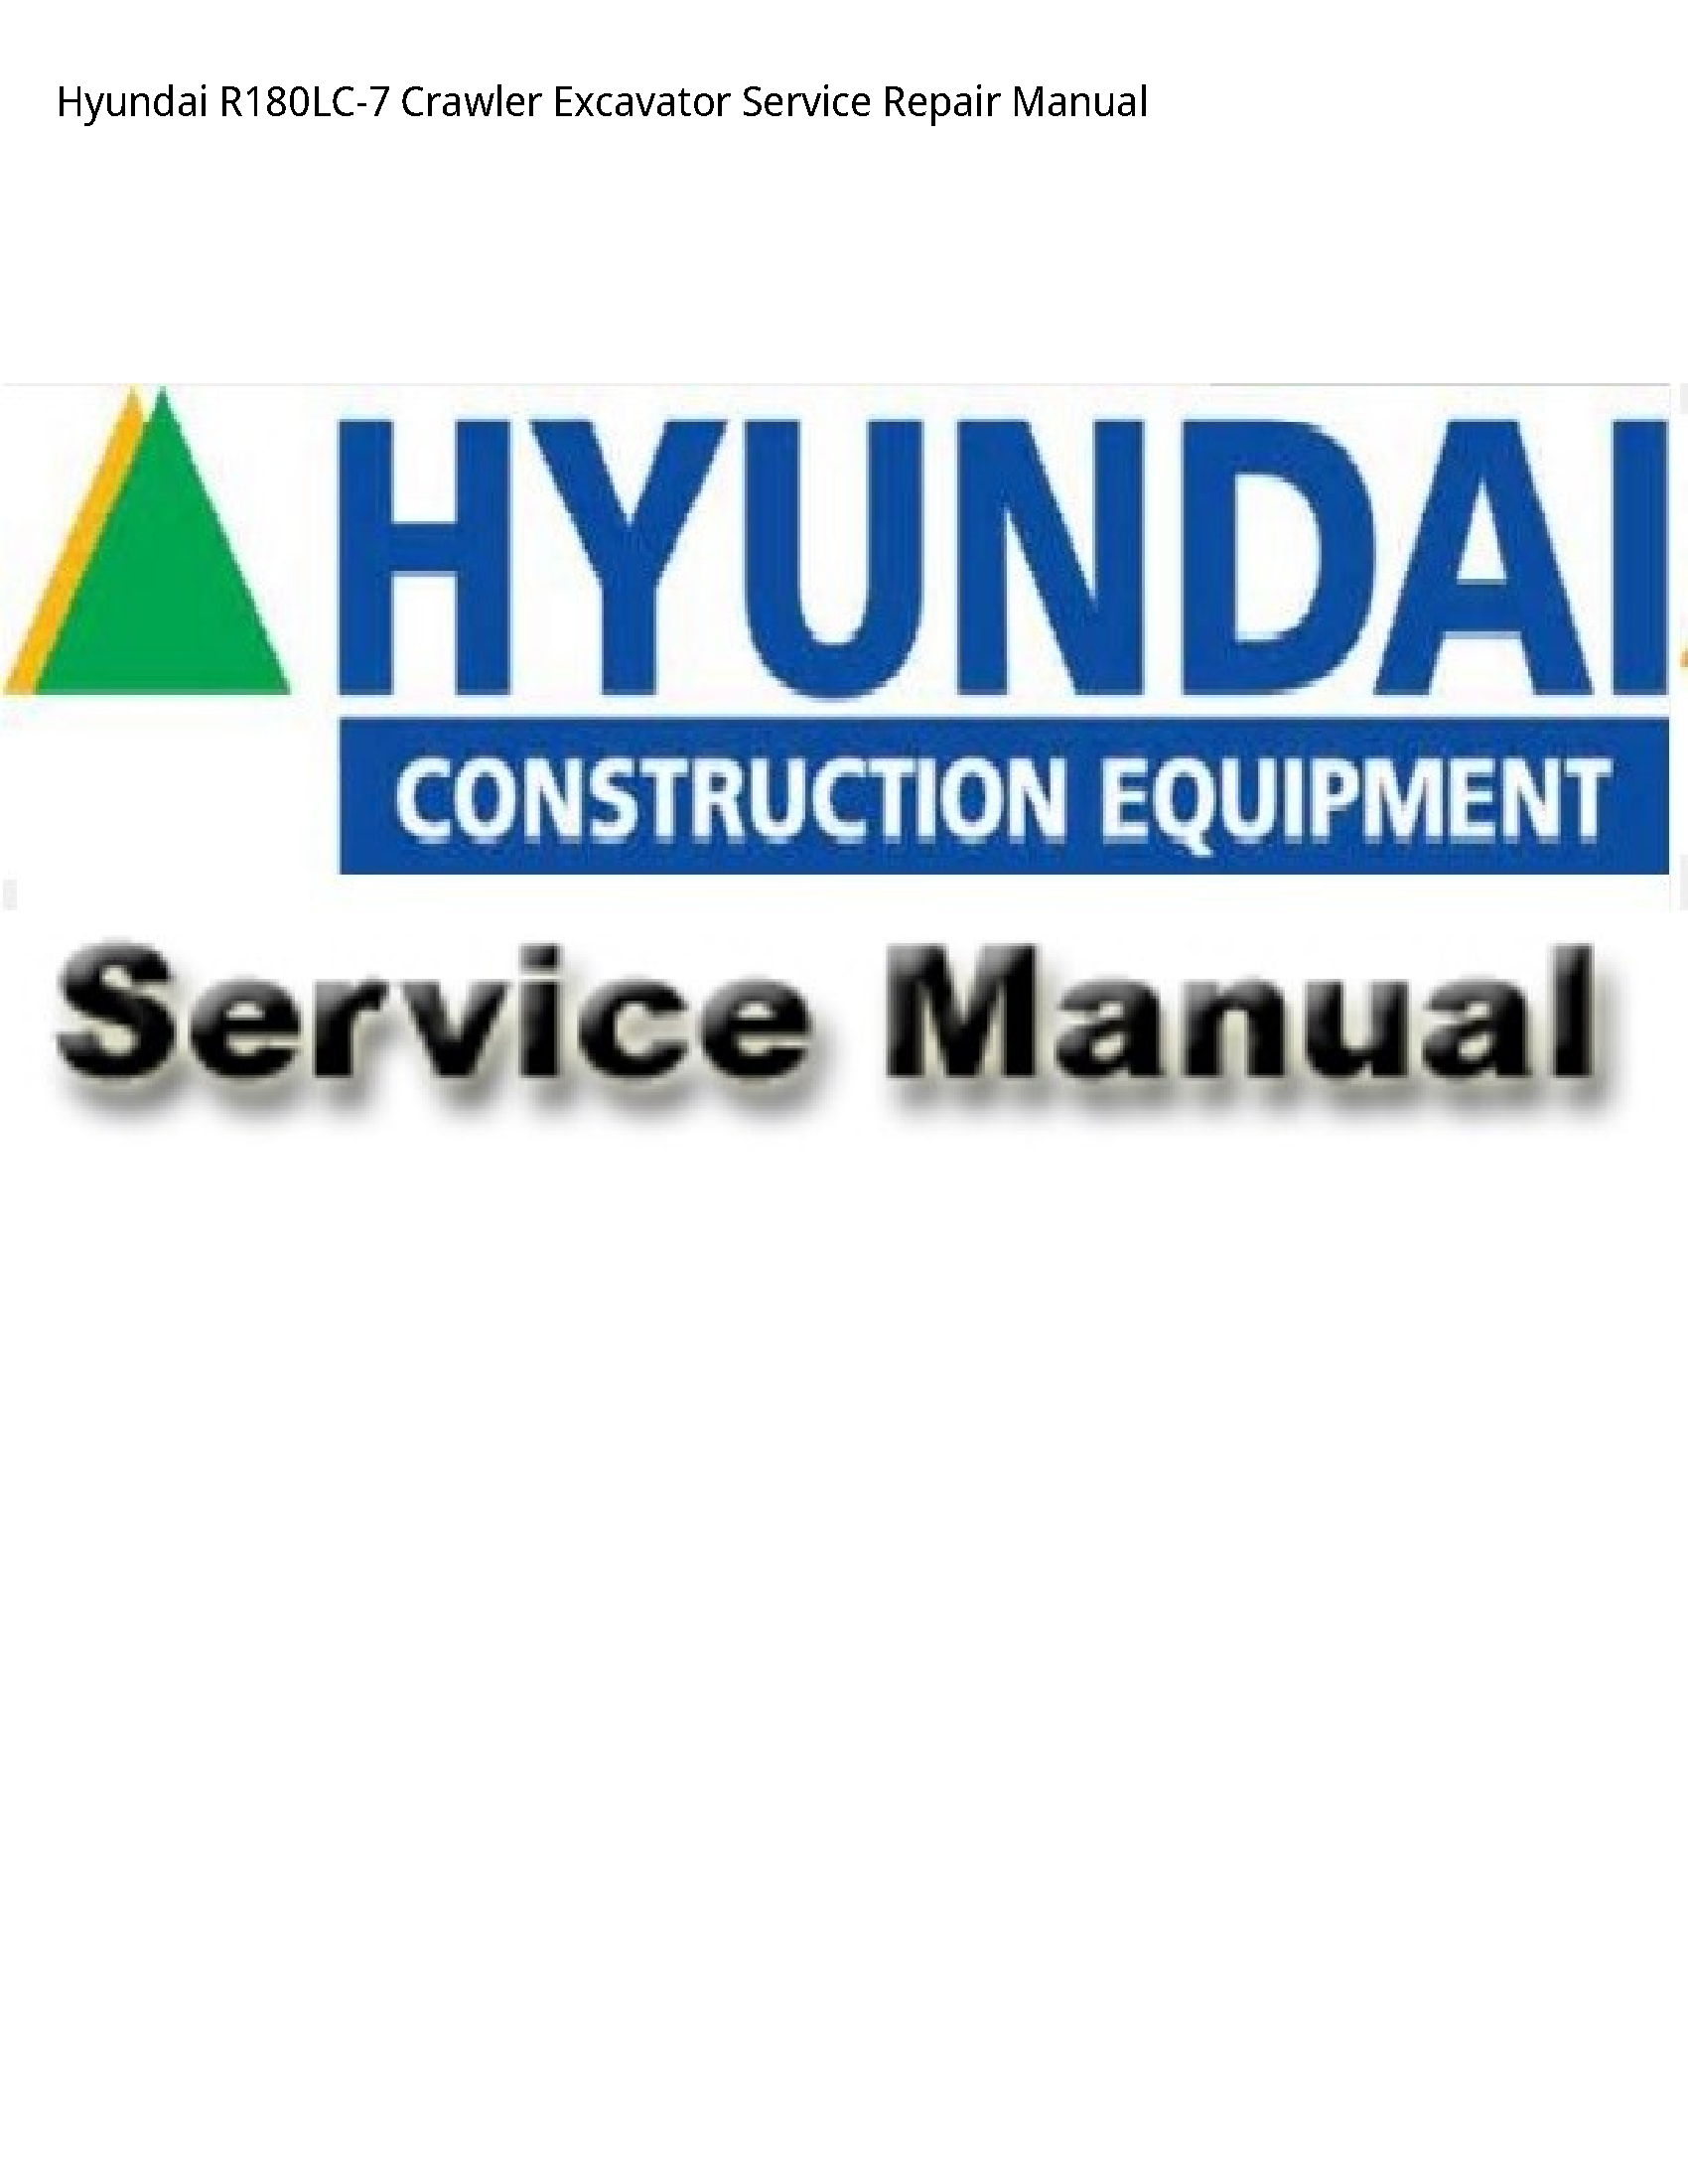 Hyundai R180LC-7 Crawler Excavator manual